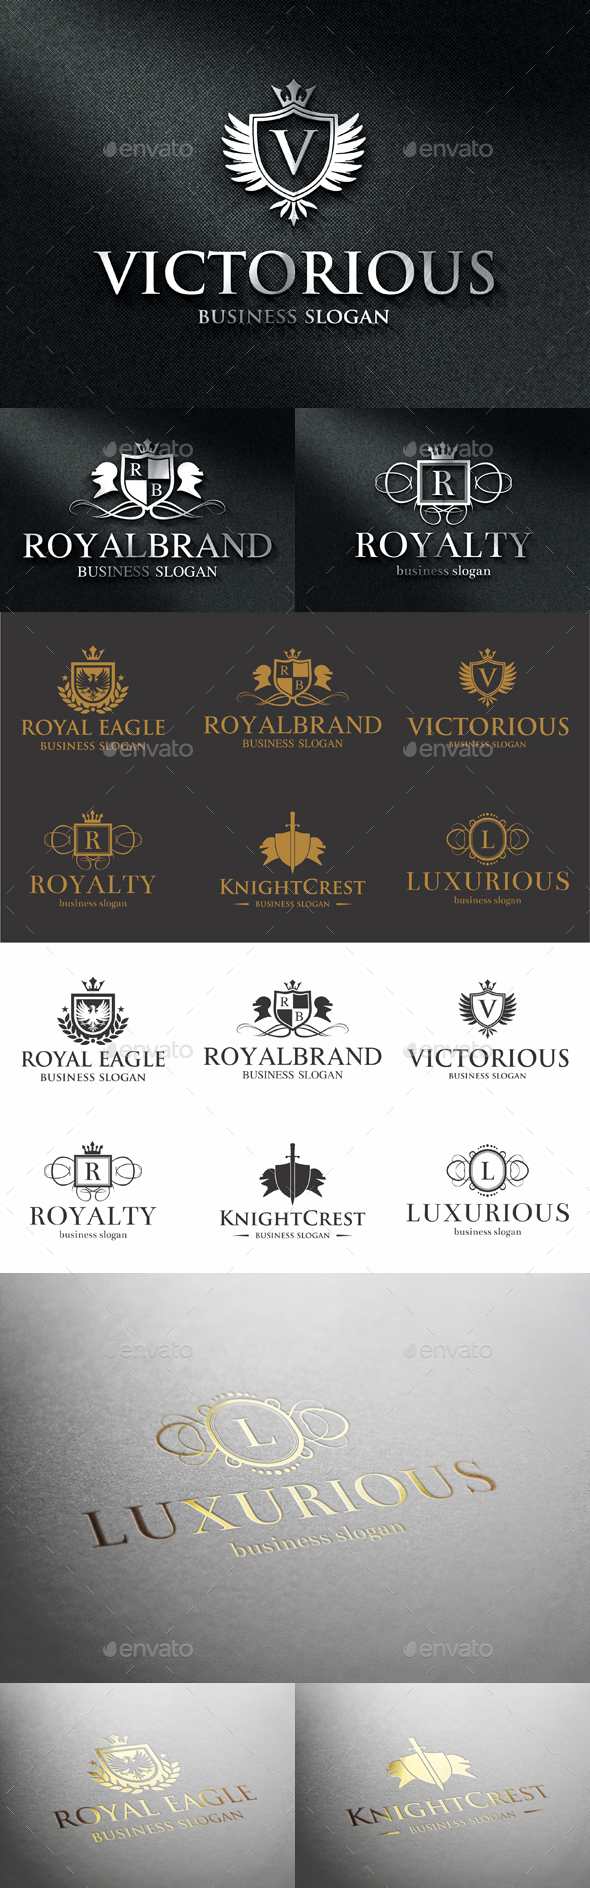 Royal Luxurious Heraldic Crest Logos, Web Elements